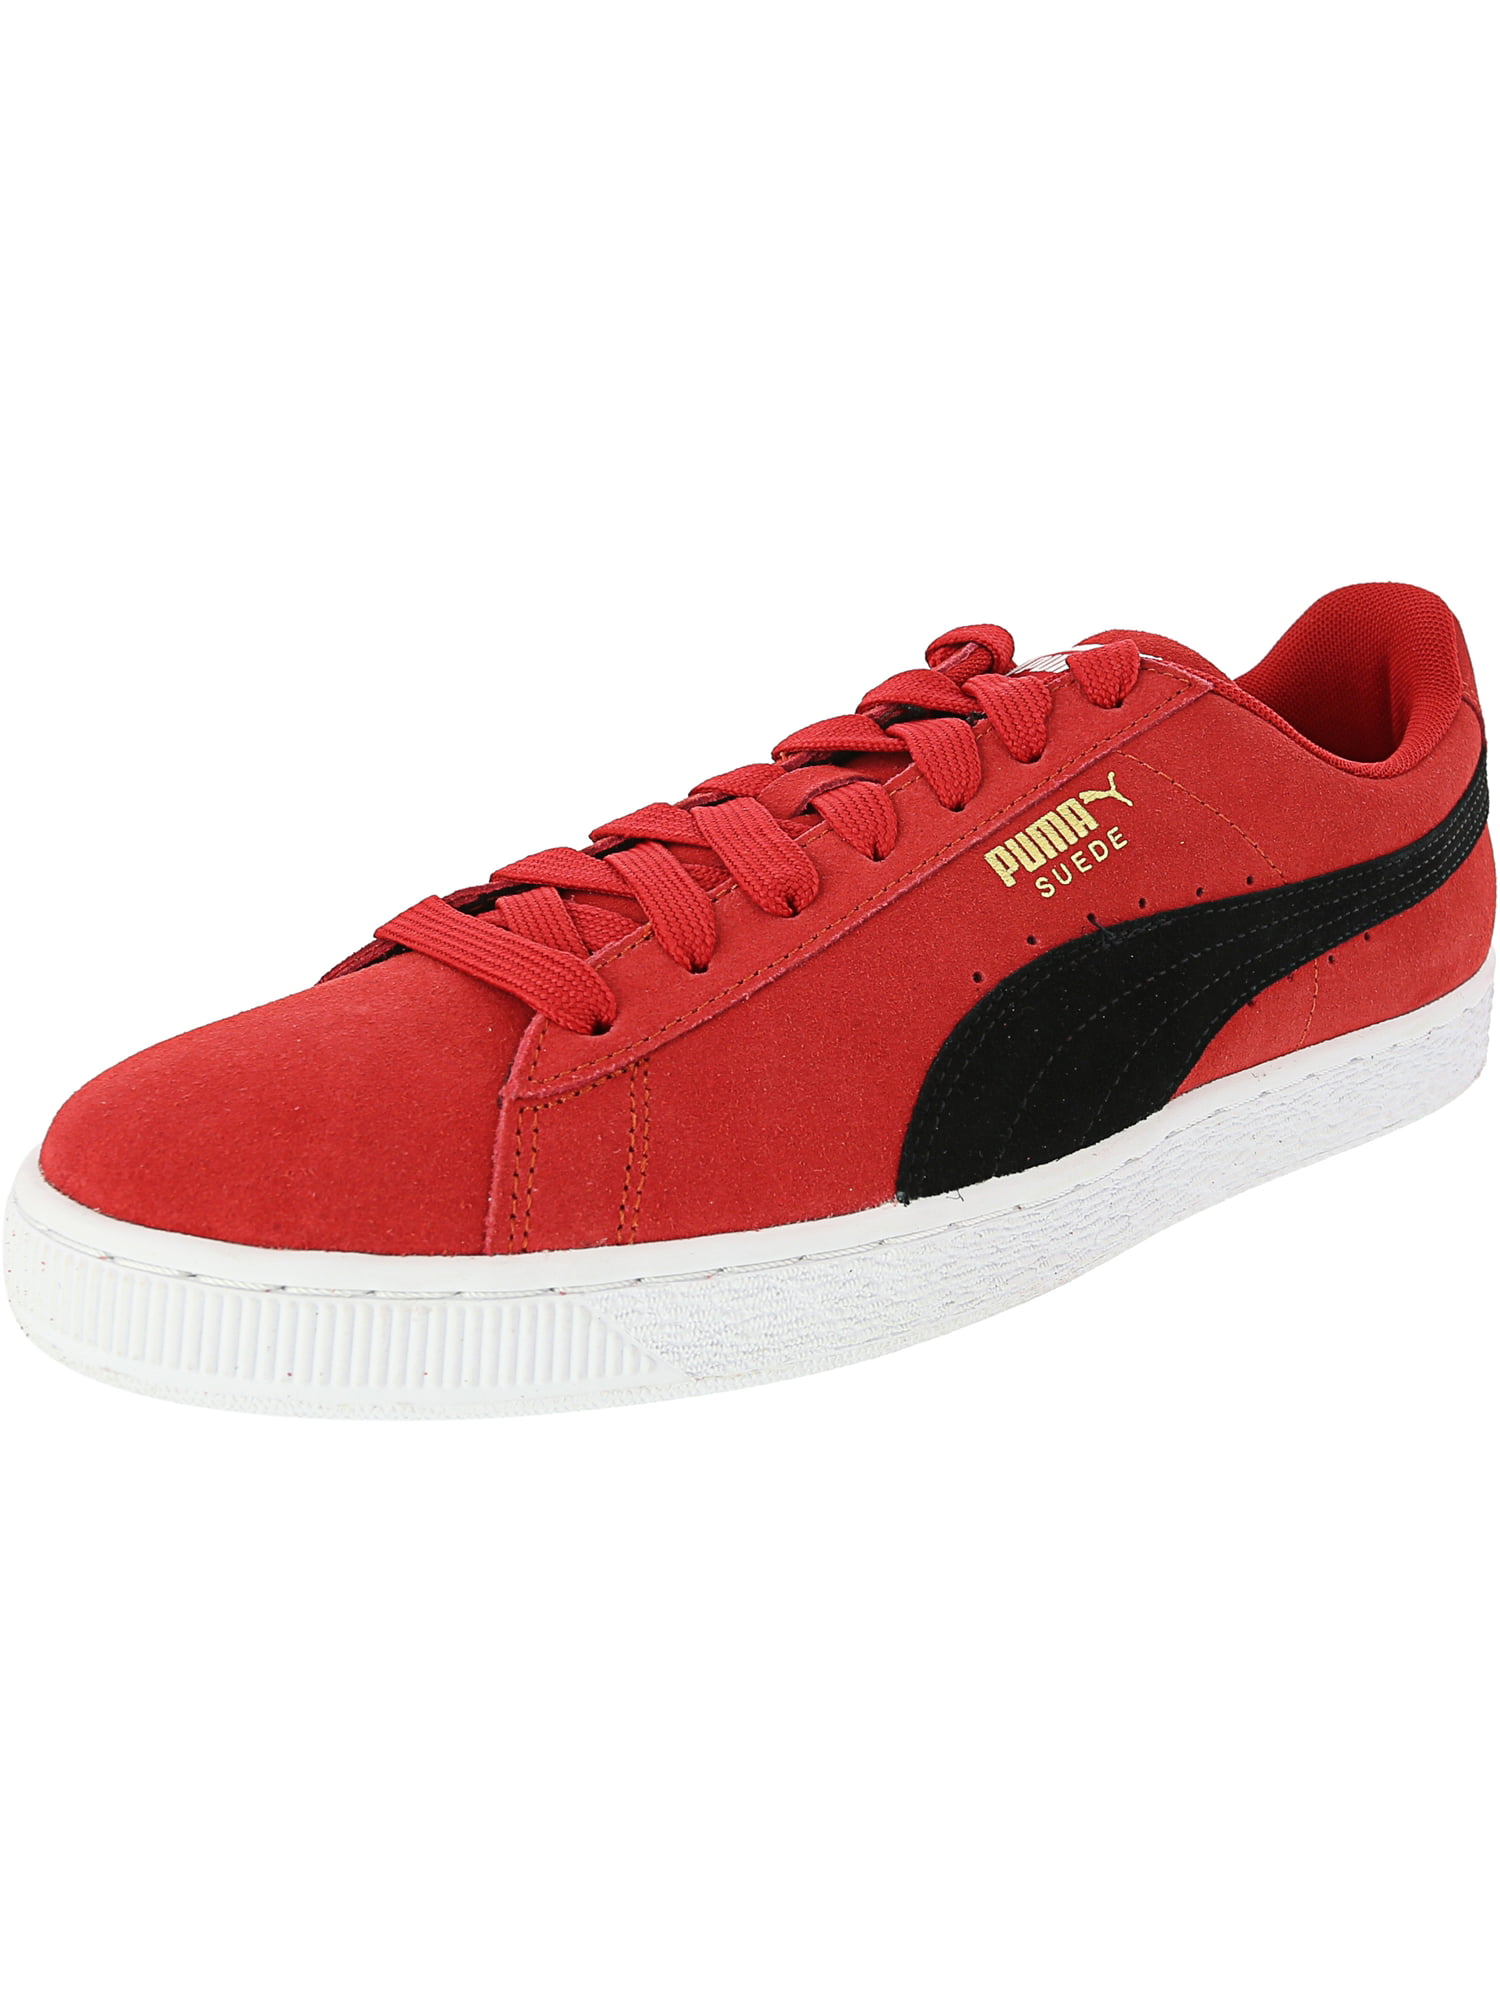 Puma Men's Suede Classic Ribbon Red / White Ankle-High Fashion Sneaker - 10.5M - Walmart.com